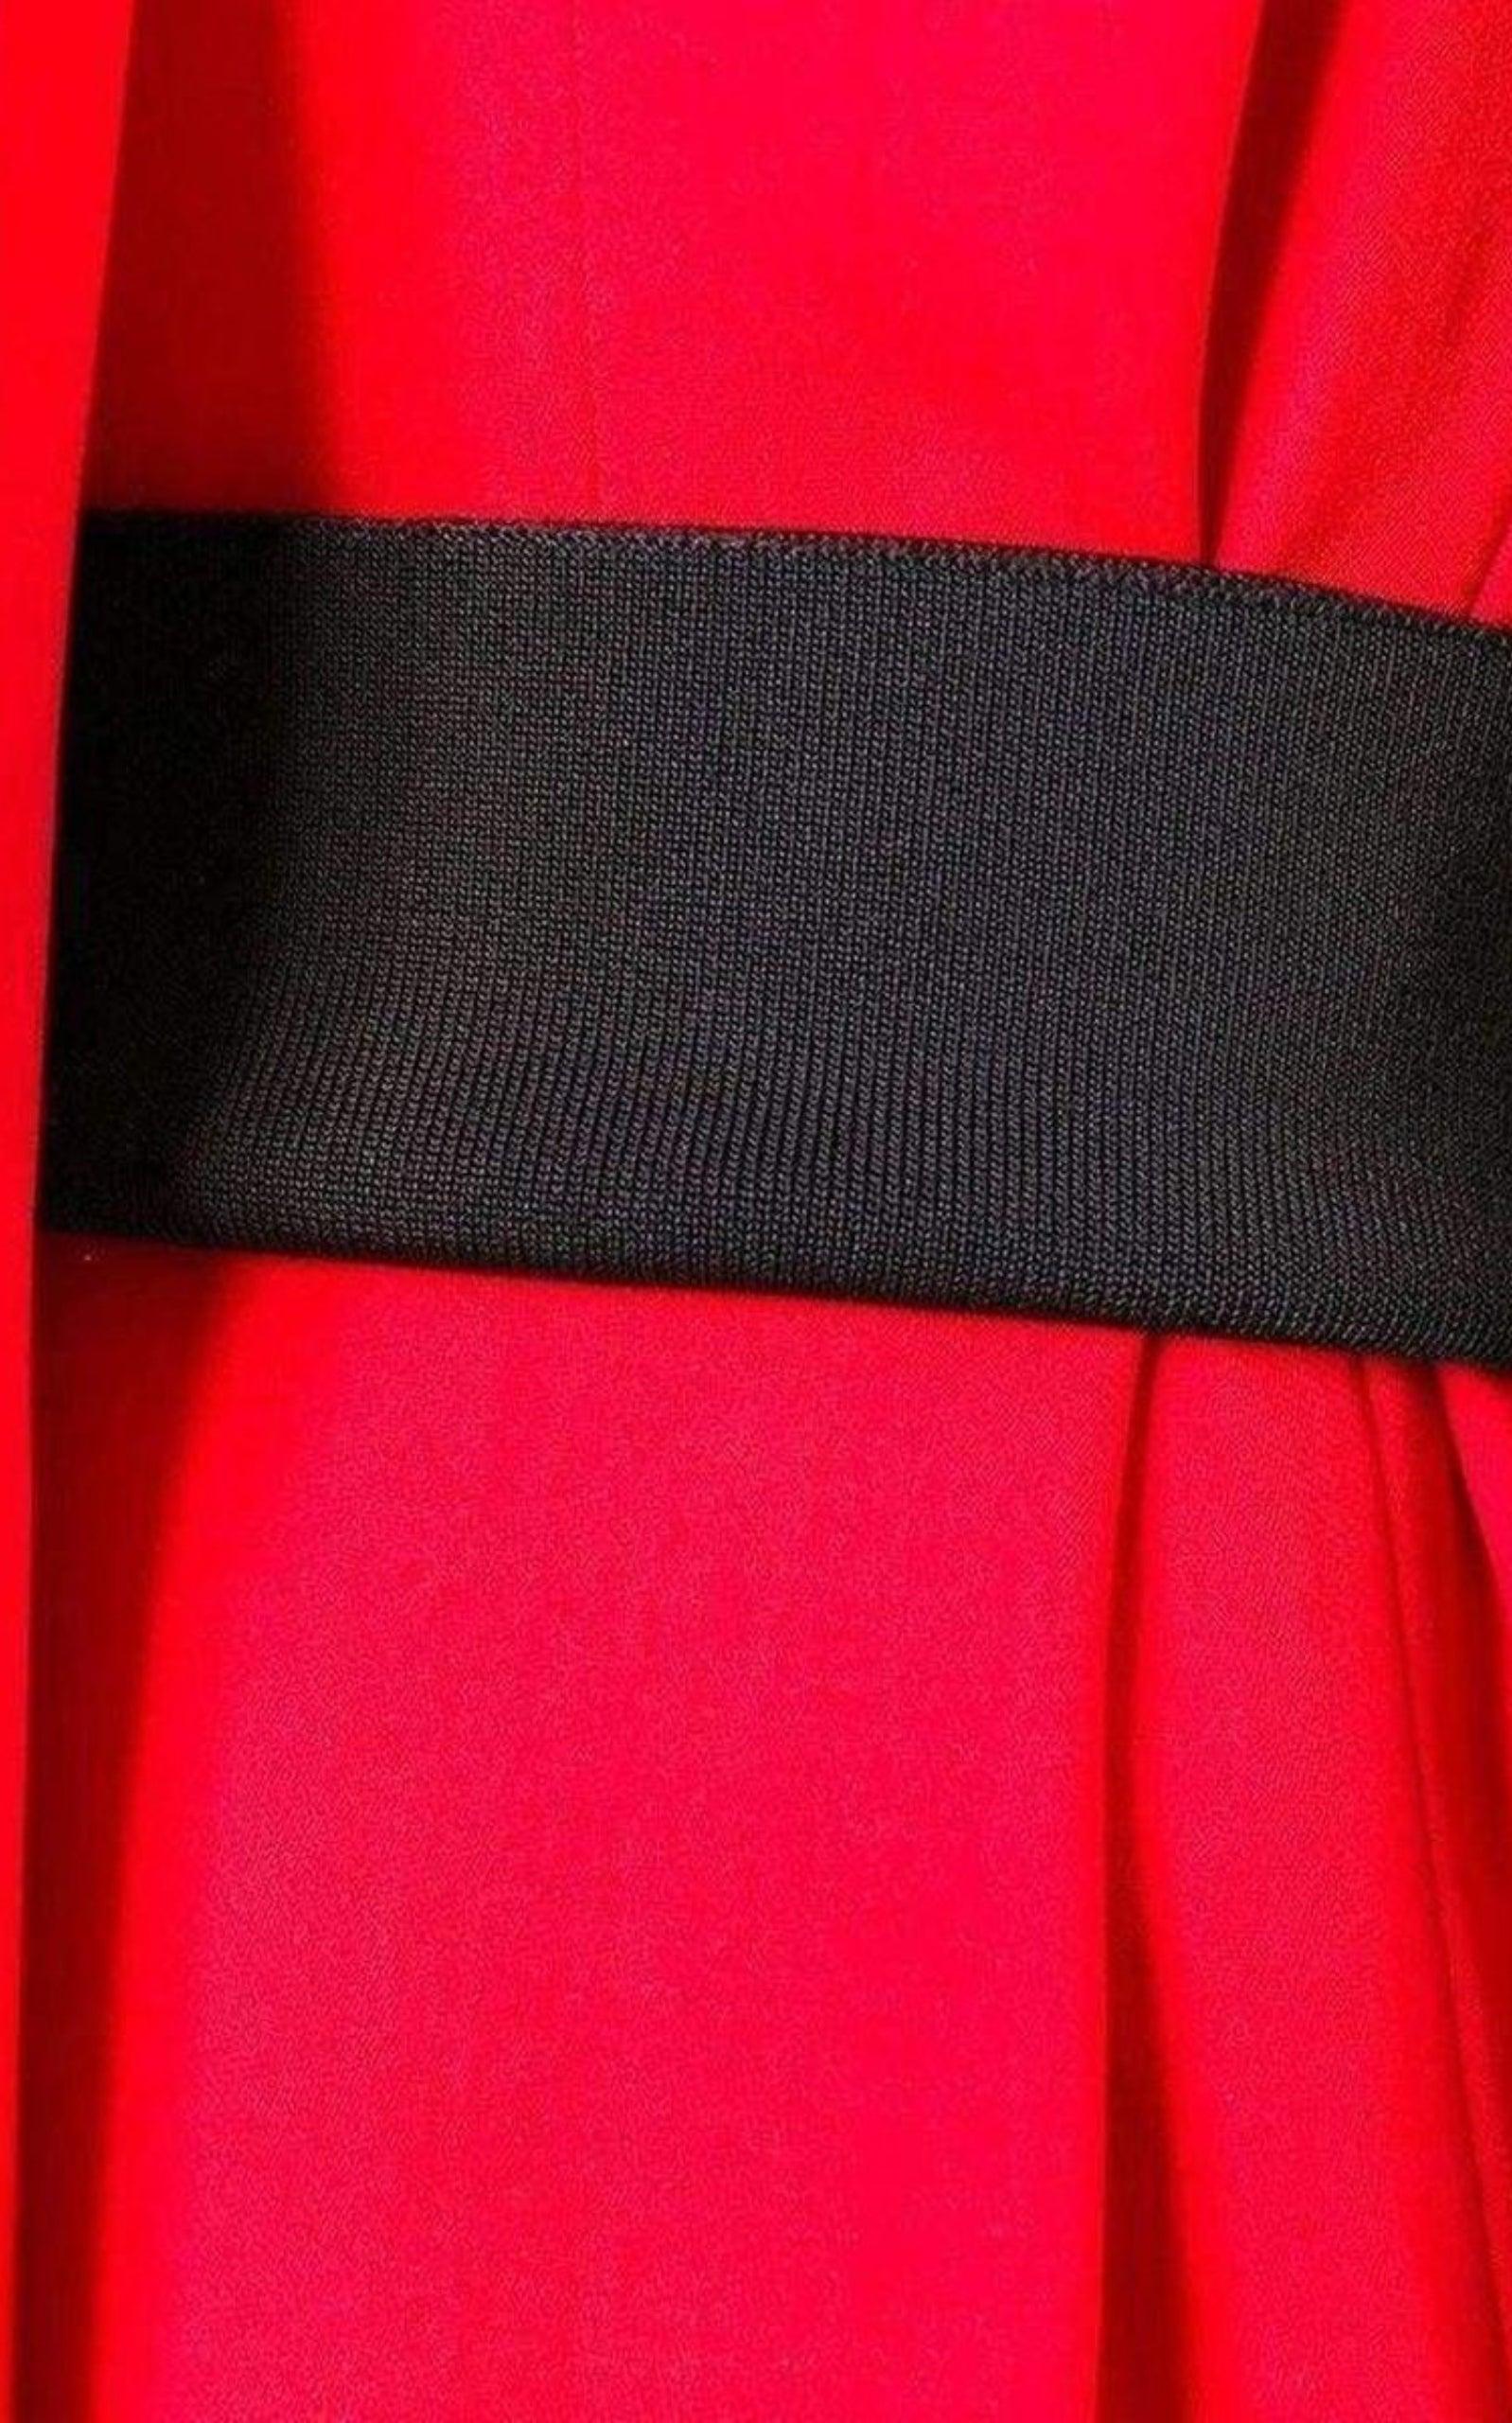  Alexander WangBelt Detail Red Sheath Dress - Runway Catalog